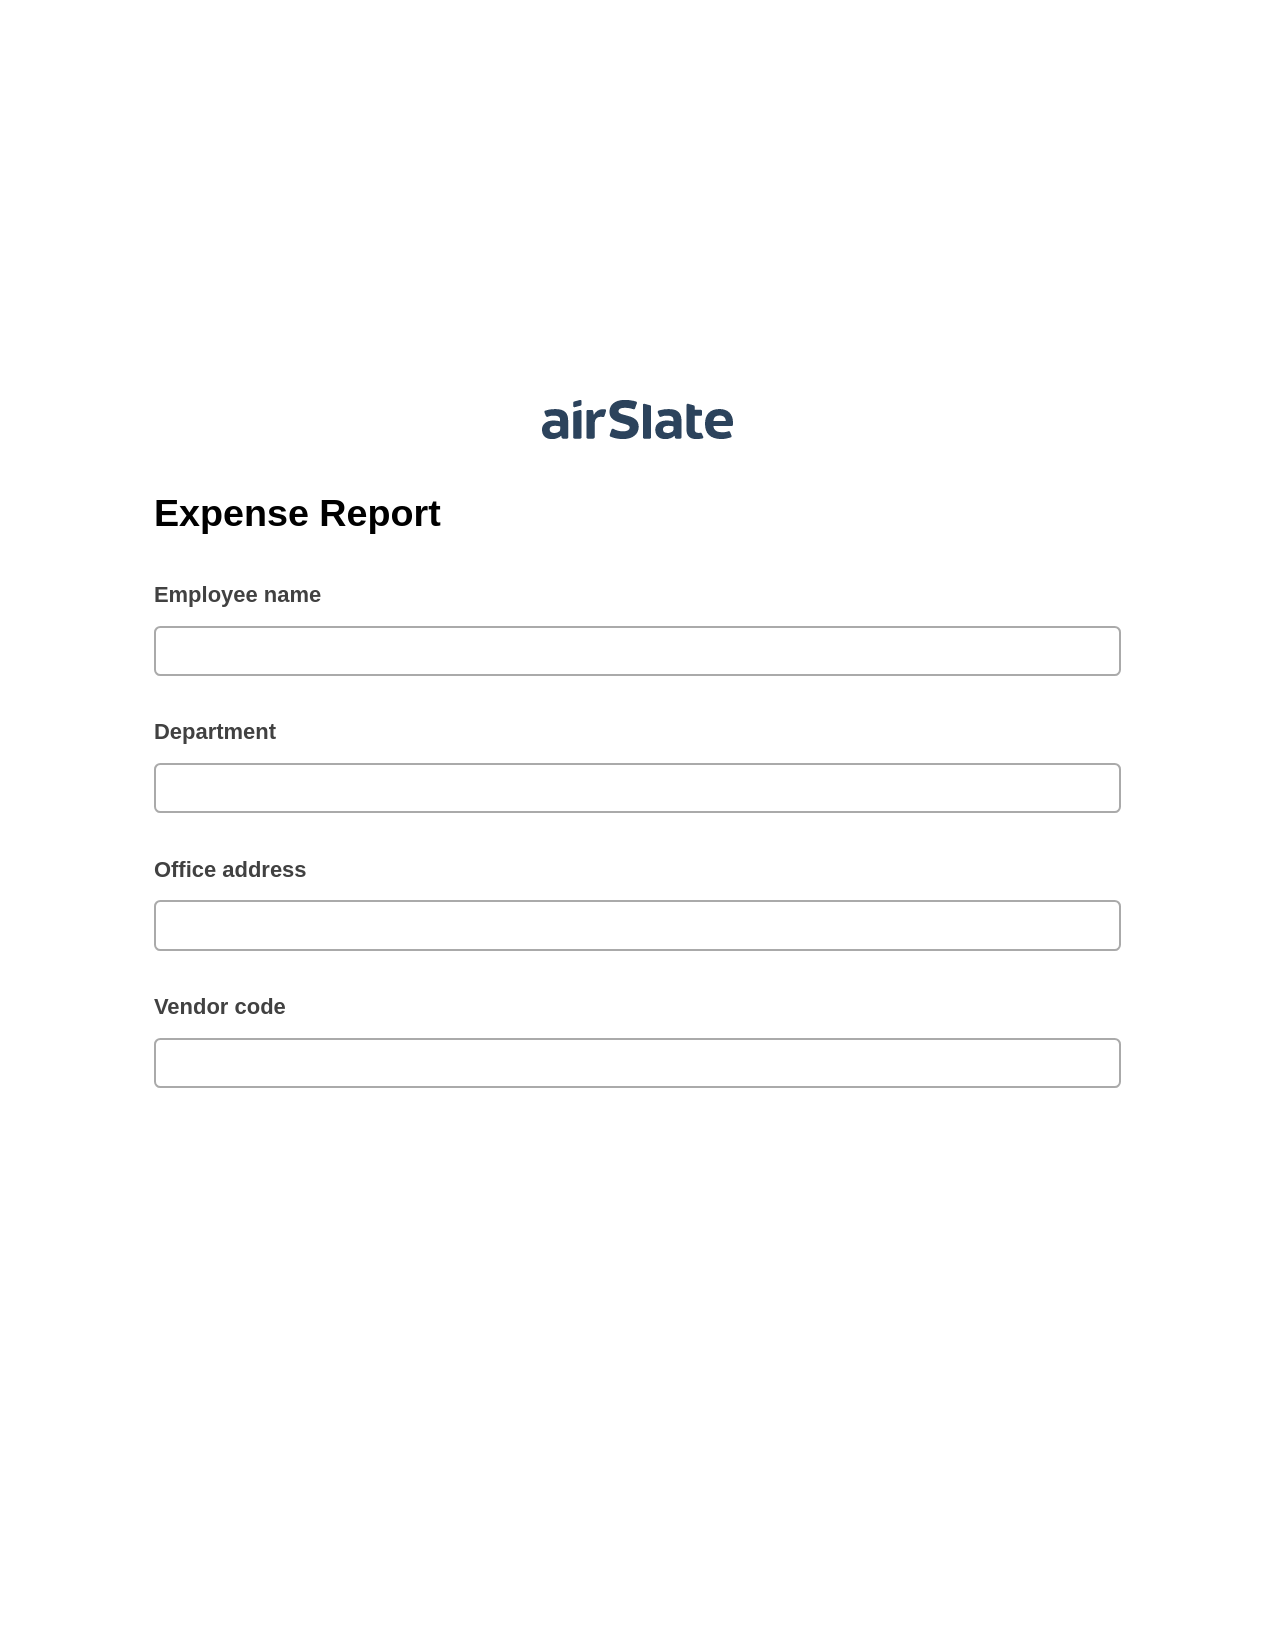 Multirole Expense Report Pre-fill Slate from MS Dynamics 365 Records Bot, SendGrid send Campaign bot, OneDrive Bot